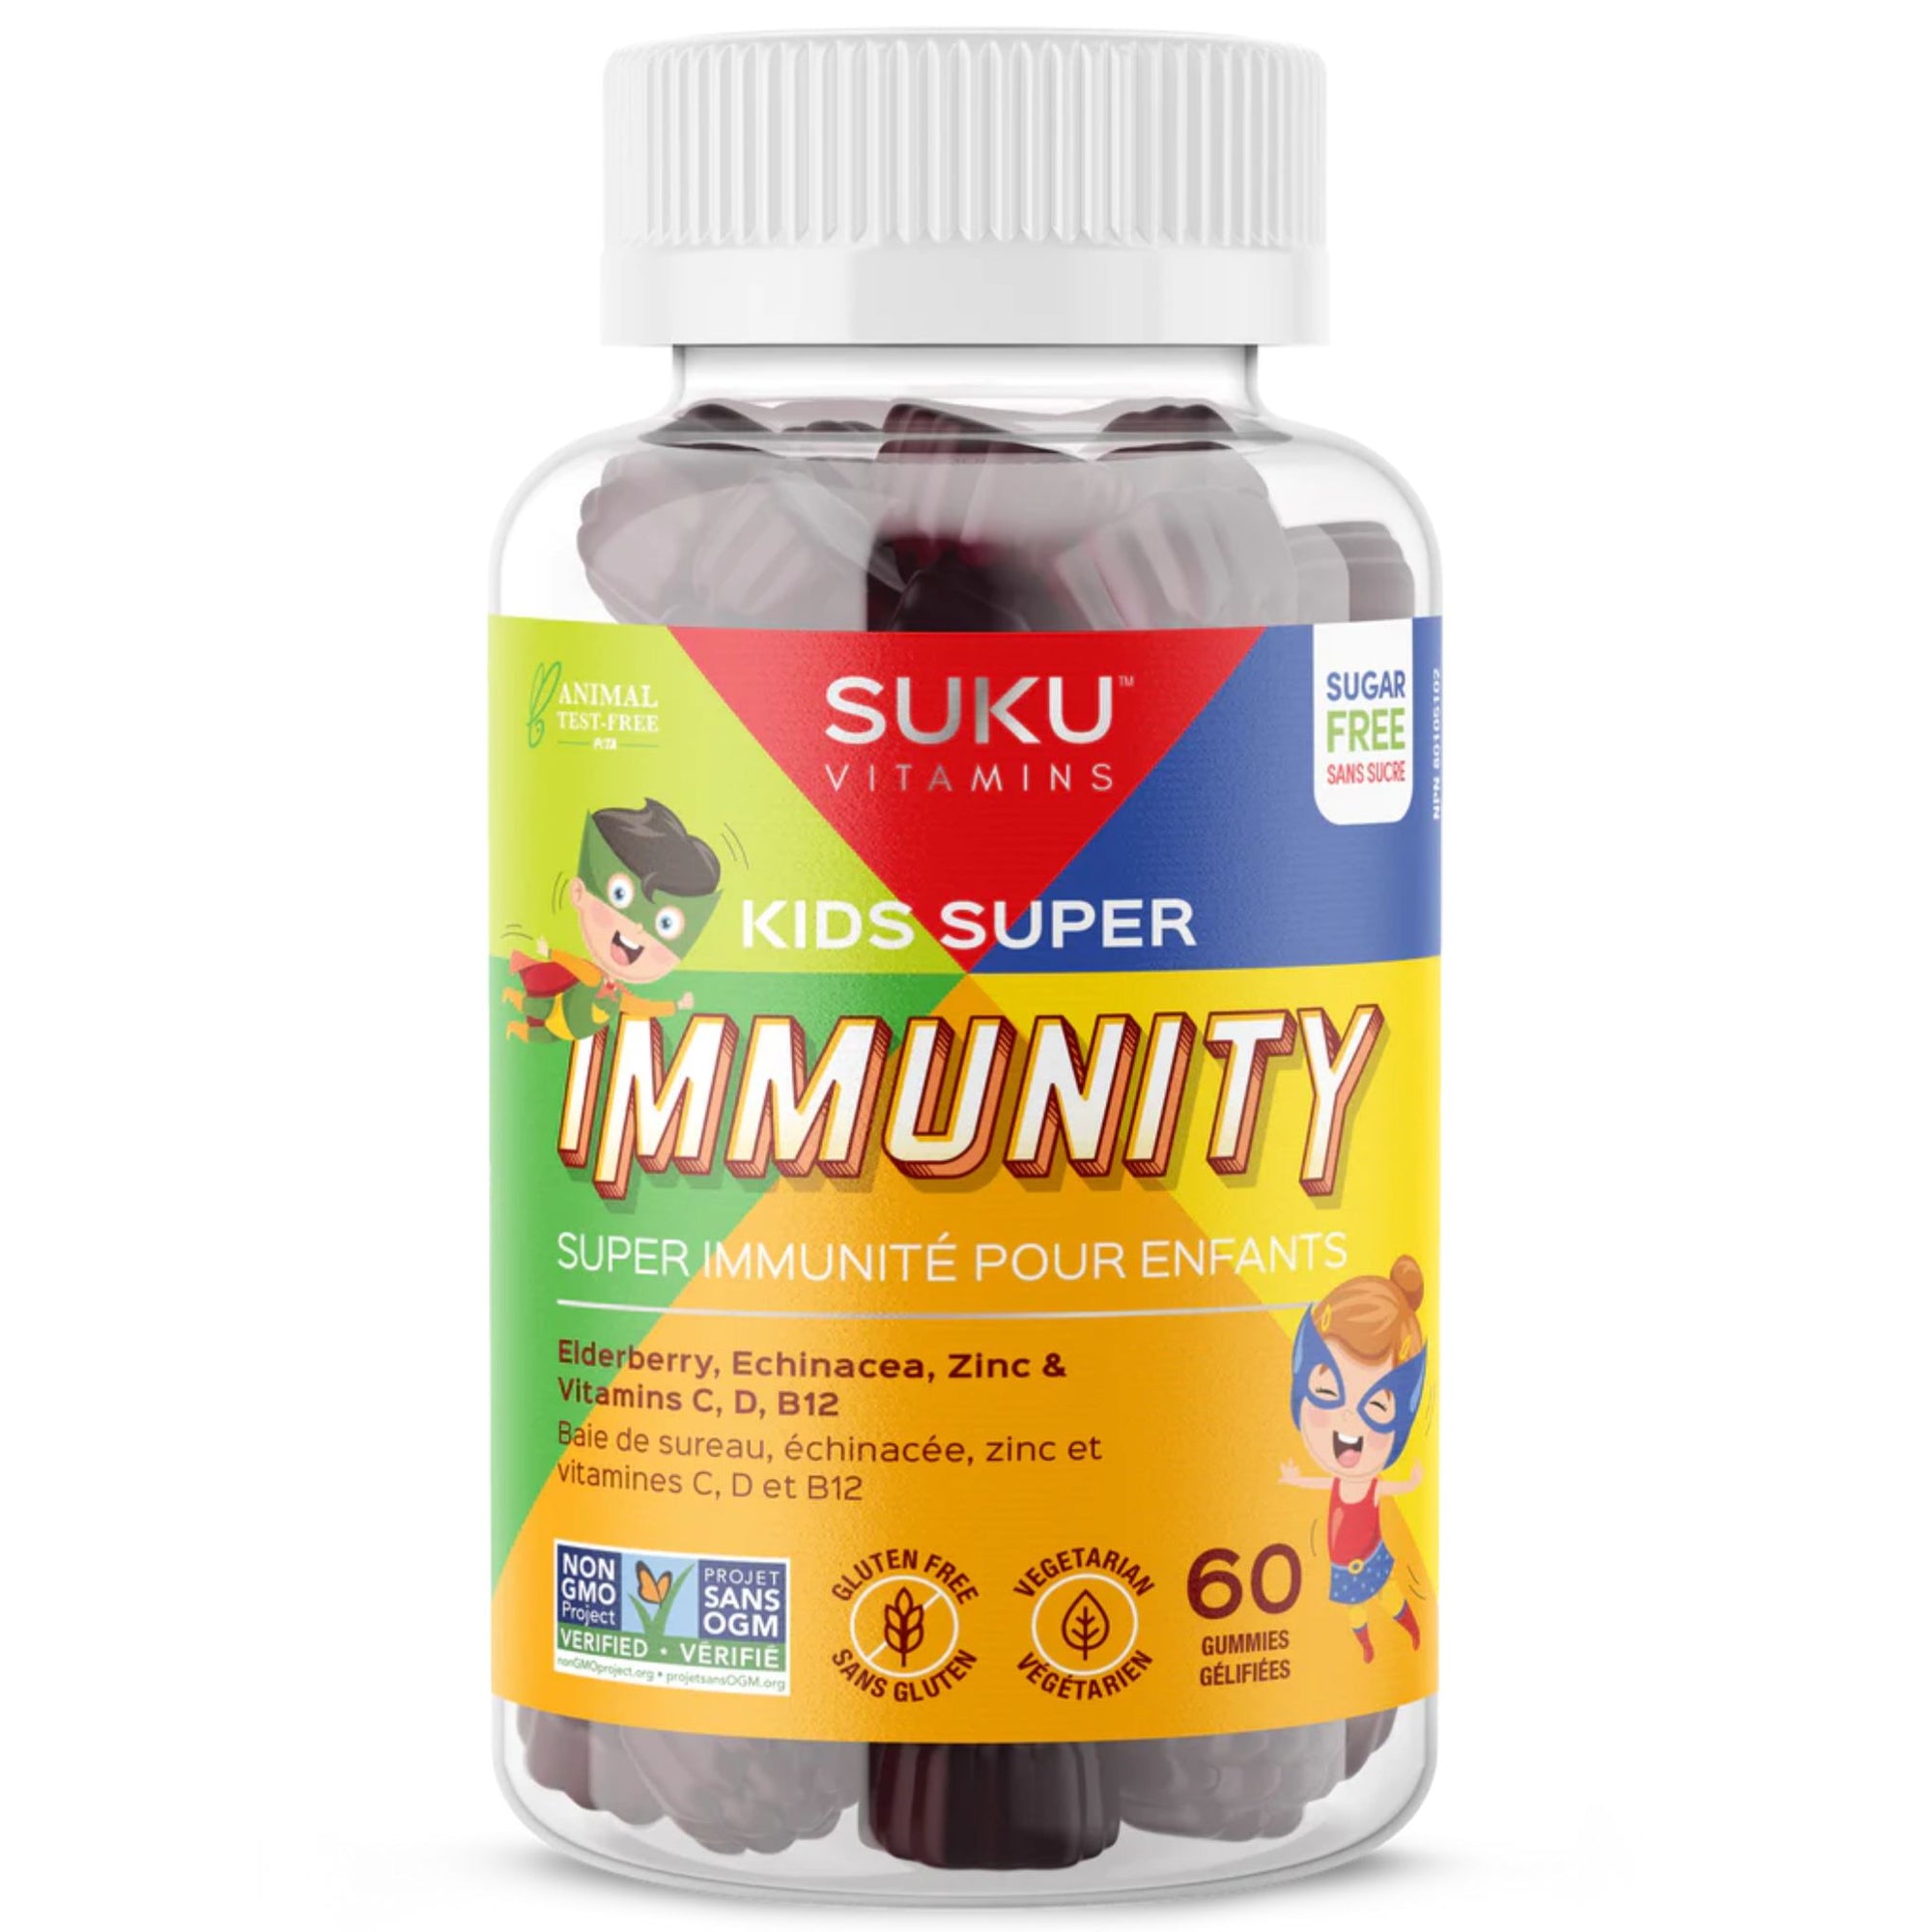 Suku Kids Super Immunity 60 Gummies bottle - Ewith elderberry, echinacea, zinc, vitamins C, D, B12. 